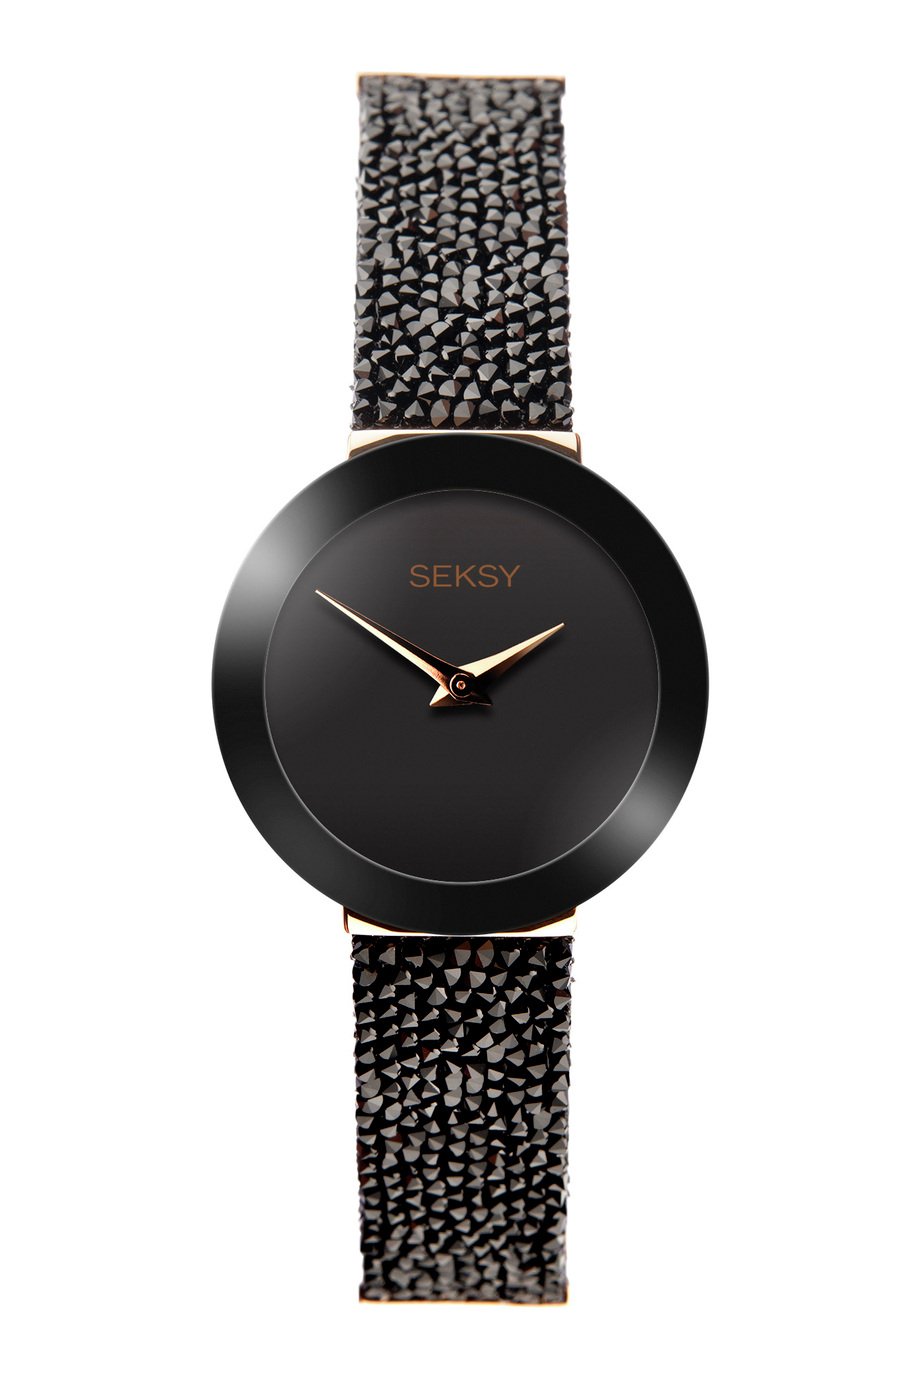 Seksy Black Crystal Leather Strap Watch